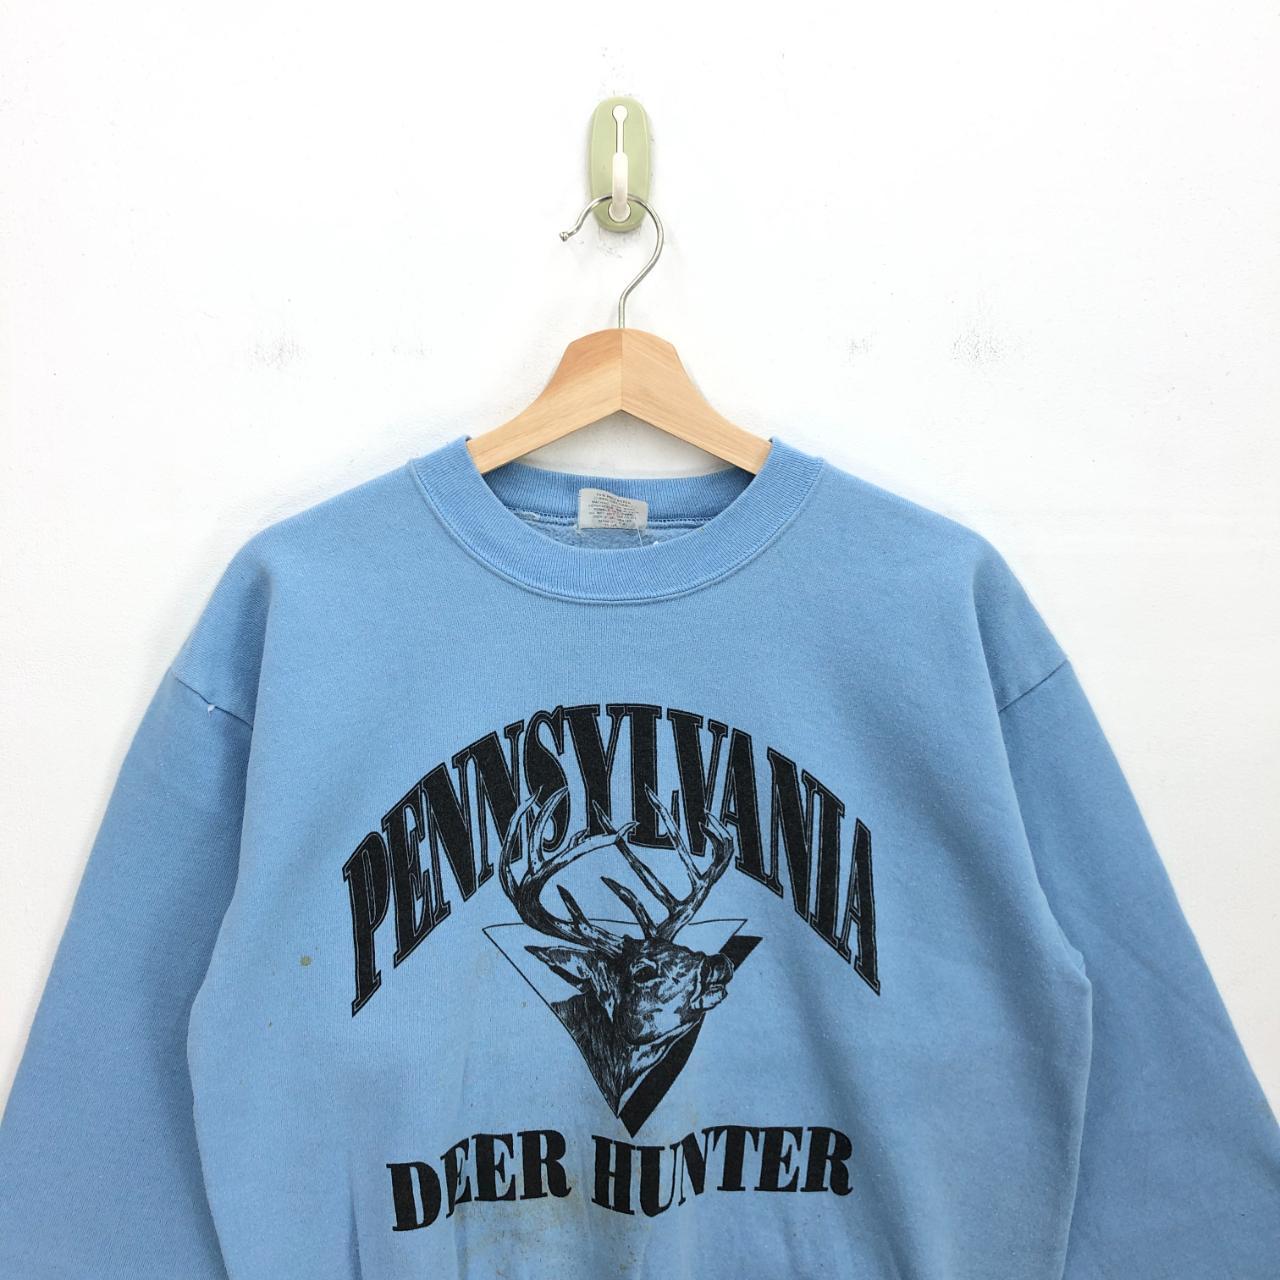 Vintage Pennsylvania Sweater Deer Hunter Sweatshirt... - Depop